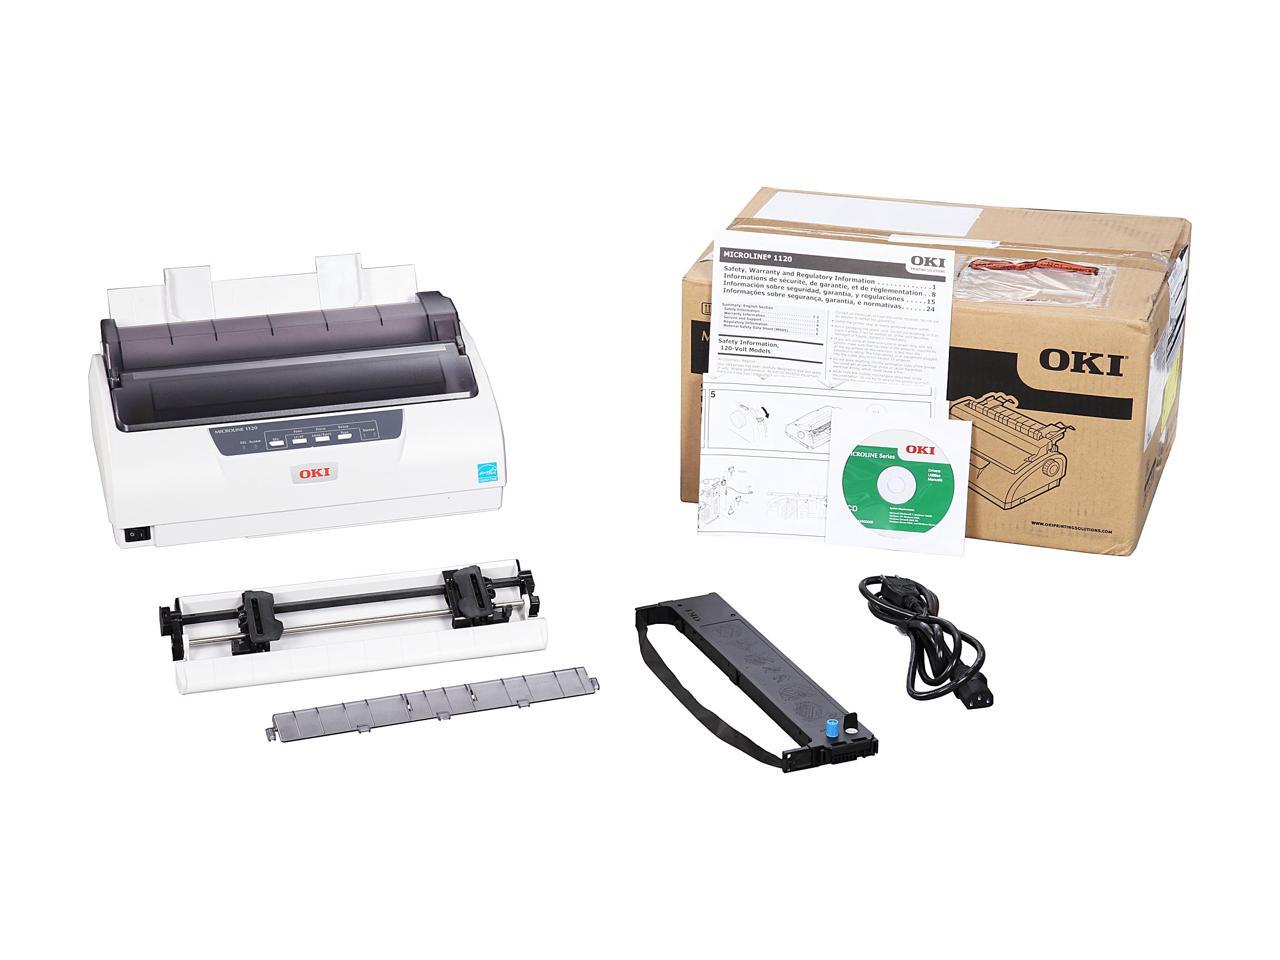 OKIDATA MICROLINE 1120 (62428503) - Parallel & Serial, USB 9 pin 120V Up to 375cps 288 x 144 Dot Matrix Printer